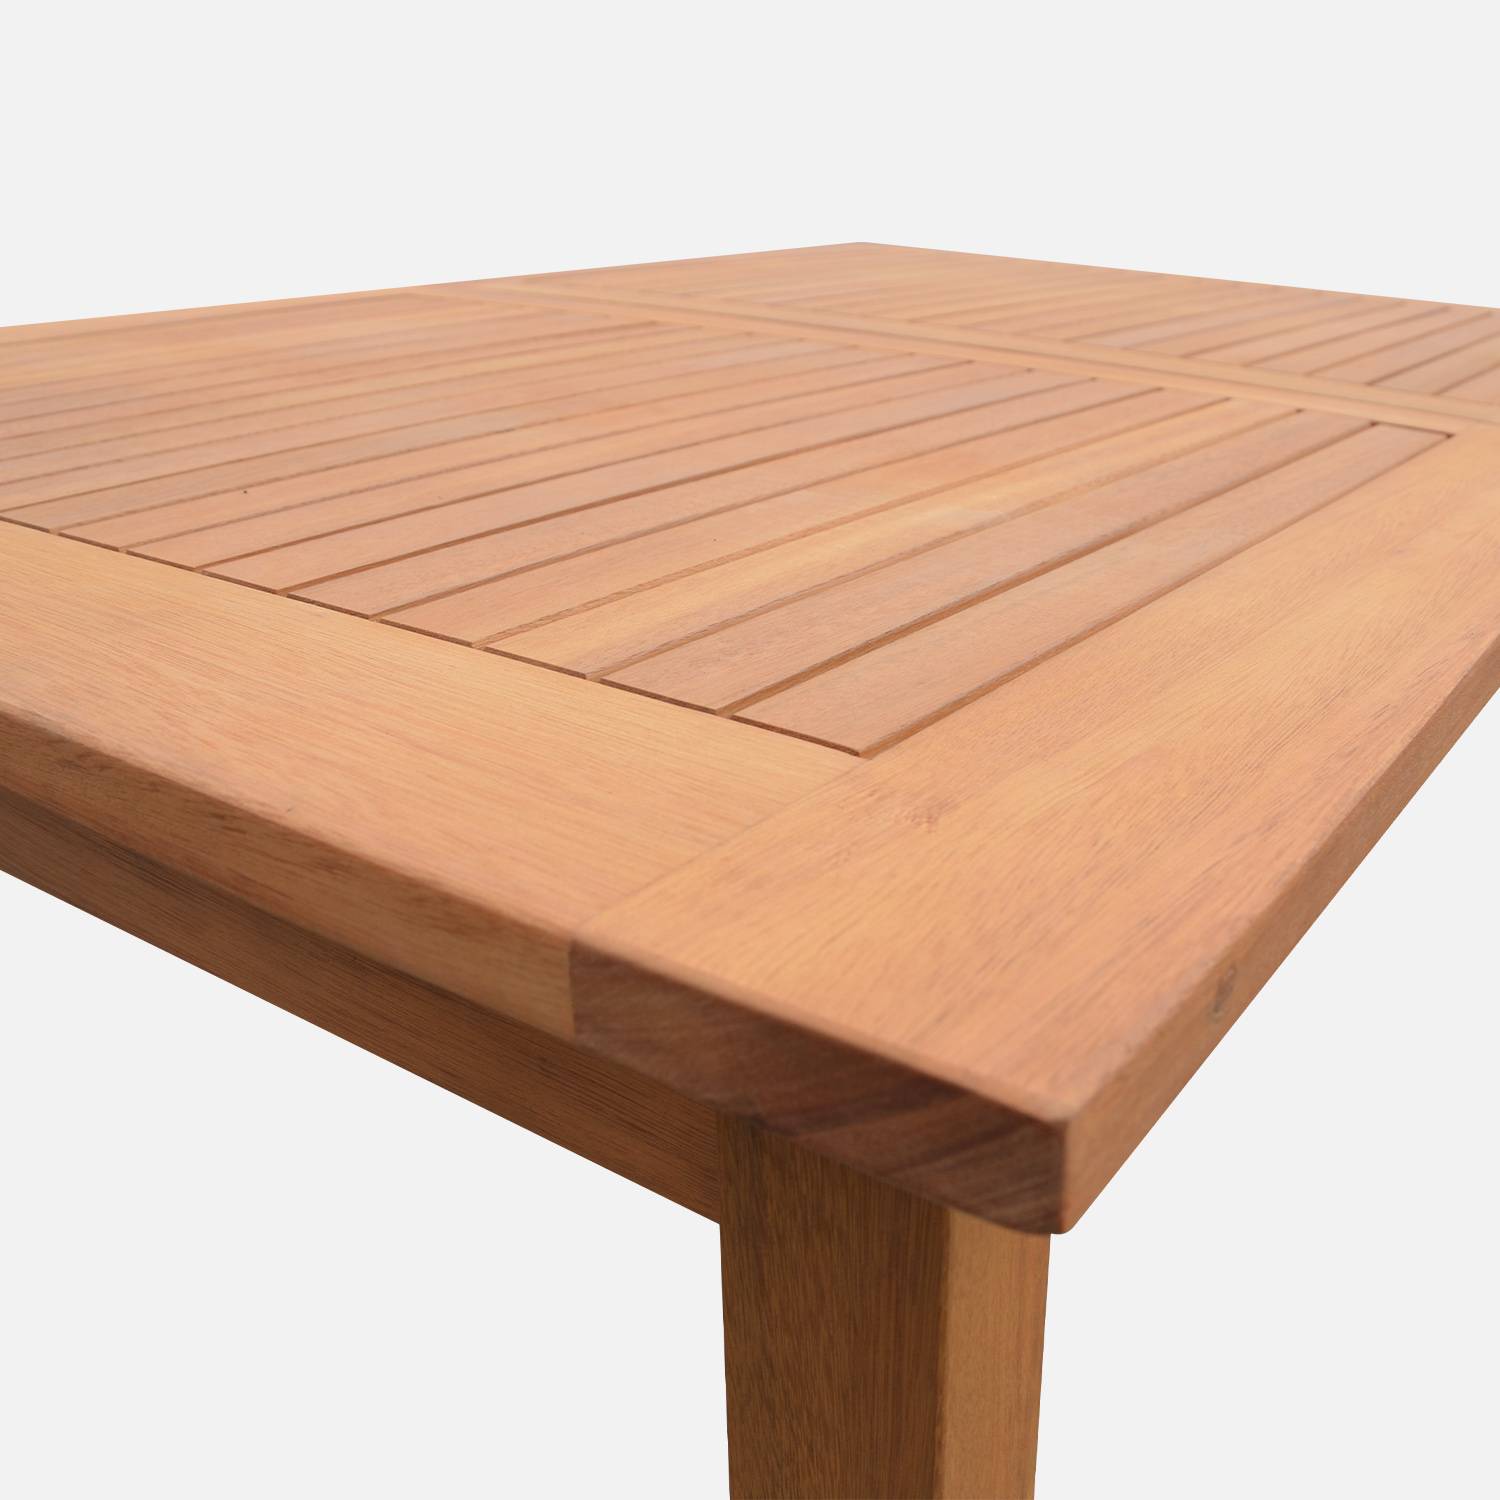 6-seater extendable garden table, natural FSC eucalyptus wood, 120-180cm - Almeria 6 - Wood colour Photo7